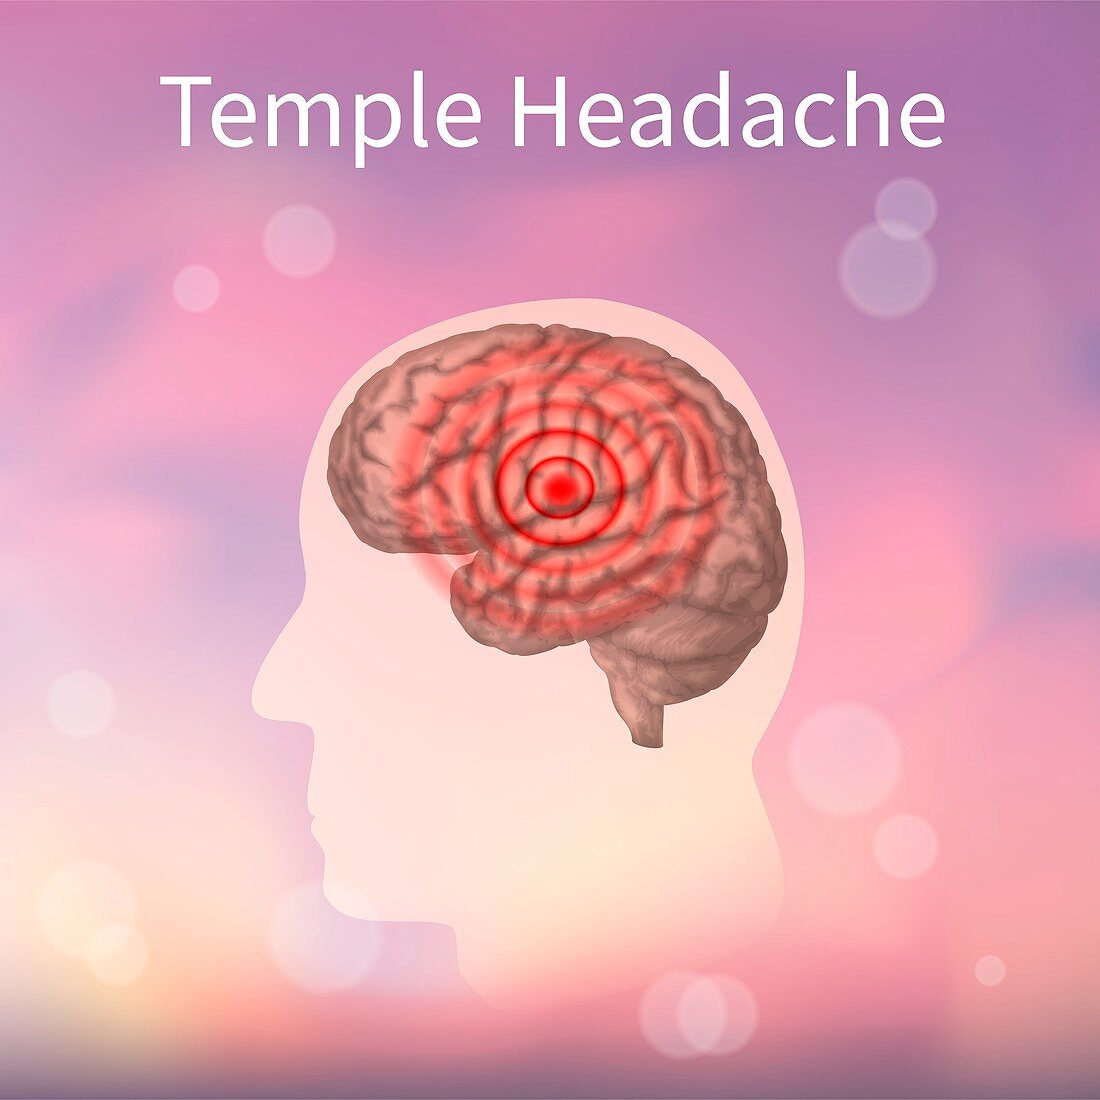 Temple headache, illustration